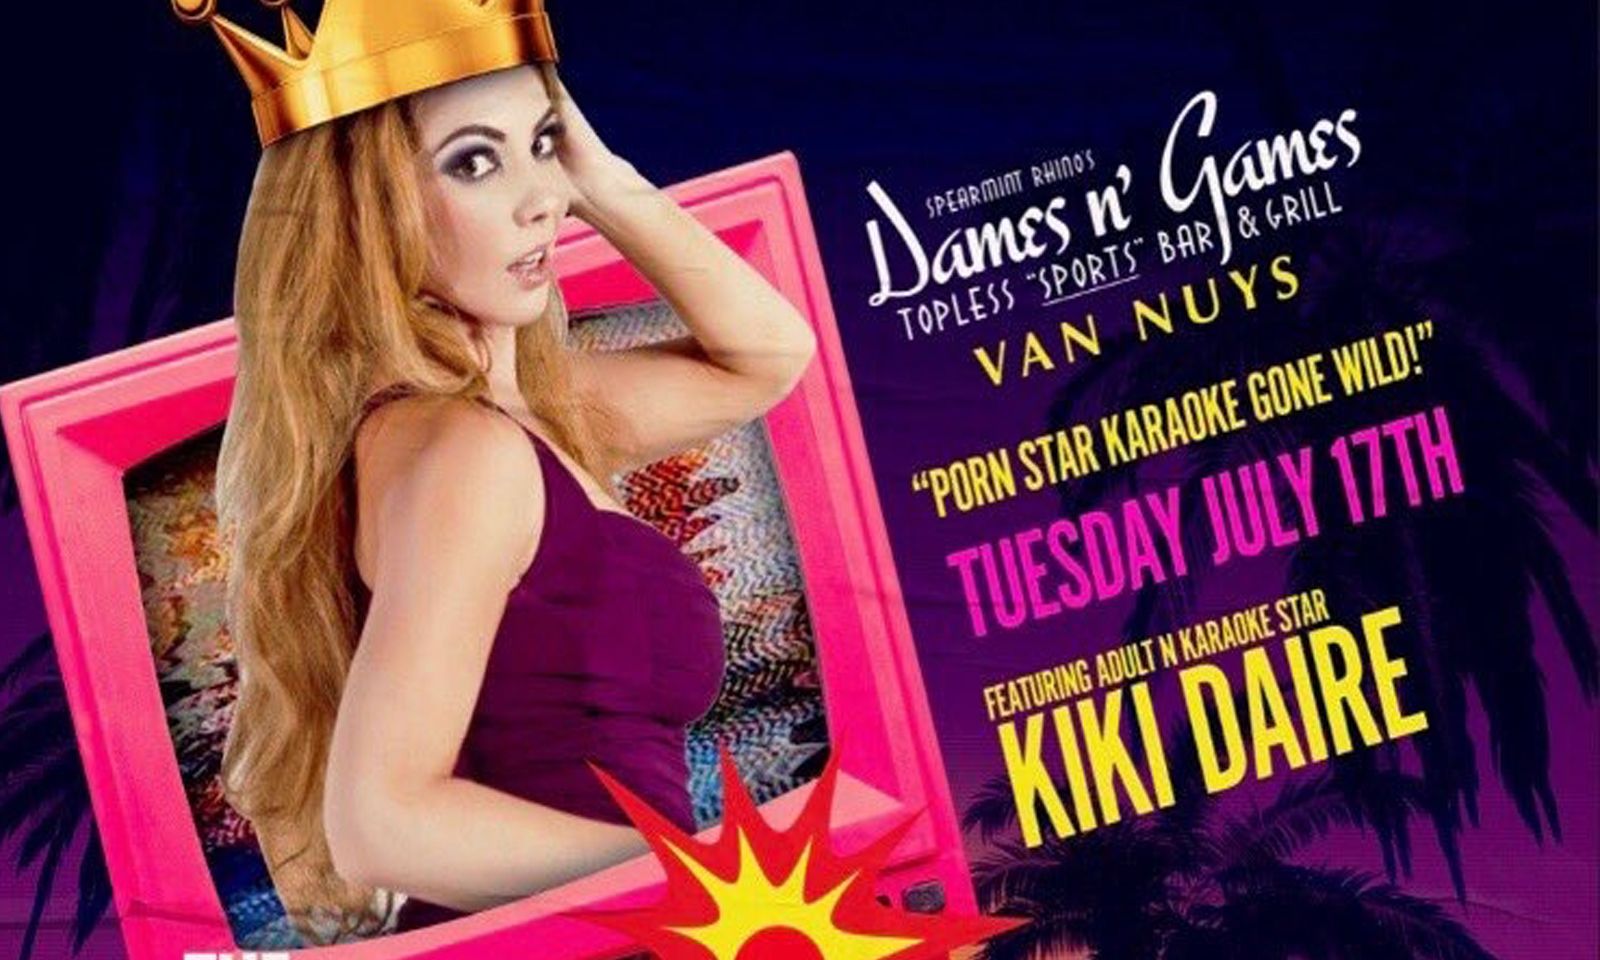 Kiki Daire Hosting Topless Karaoke at Dames N’ Games Tuesday